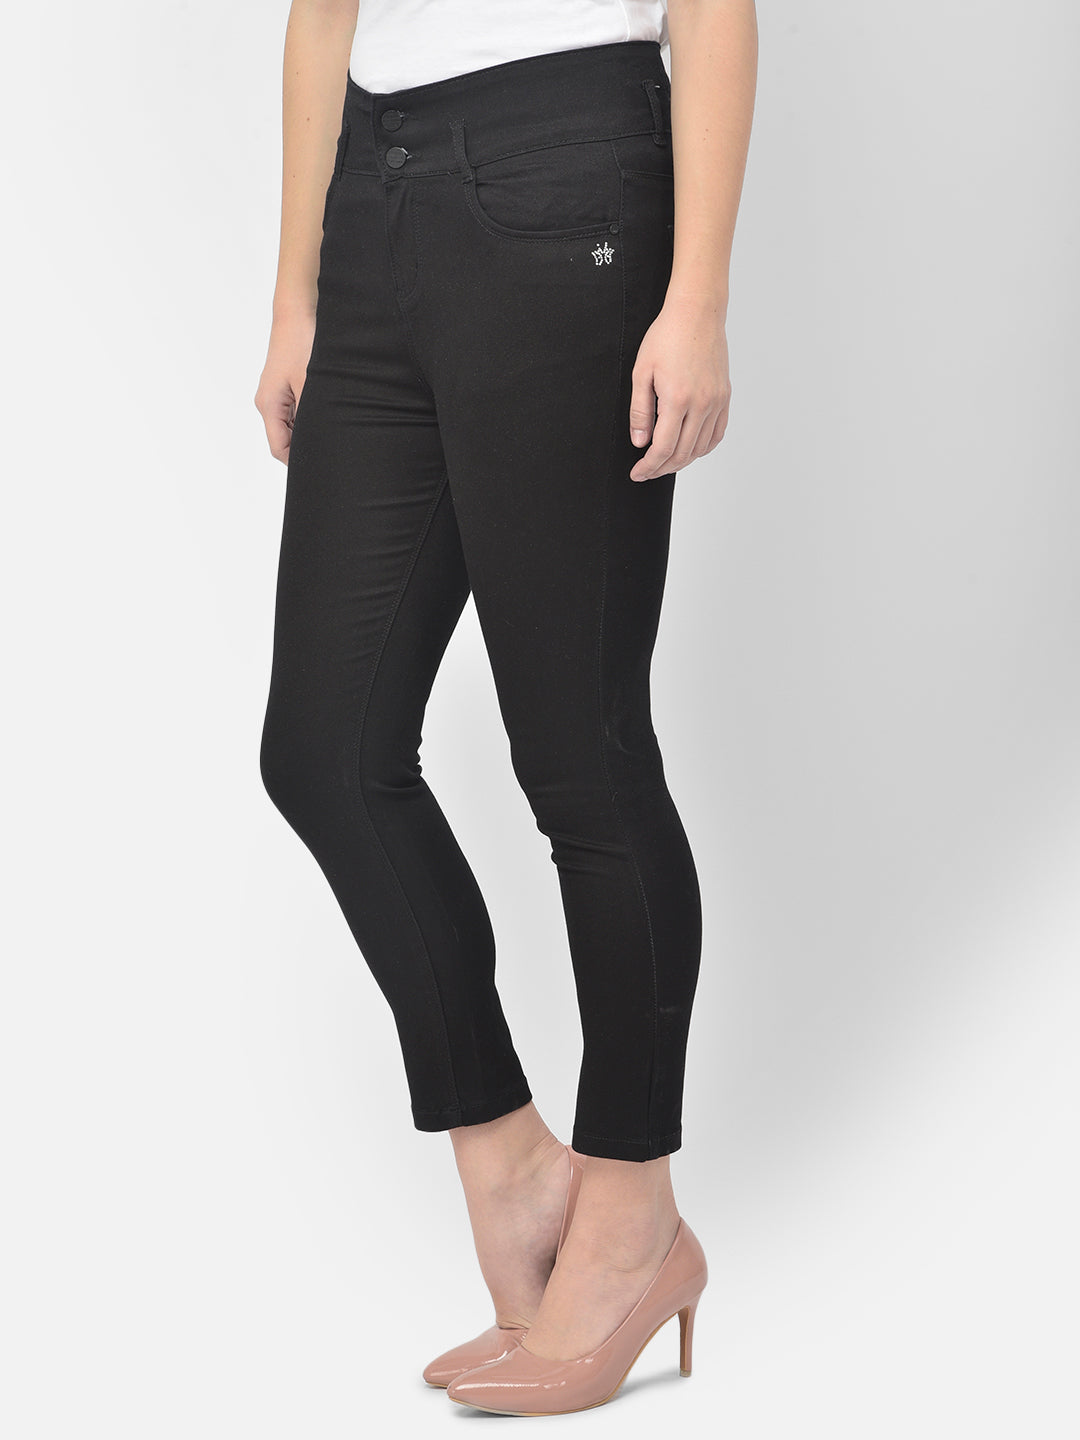 Black High Waist Jeans - Women Jeans